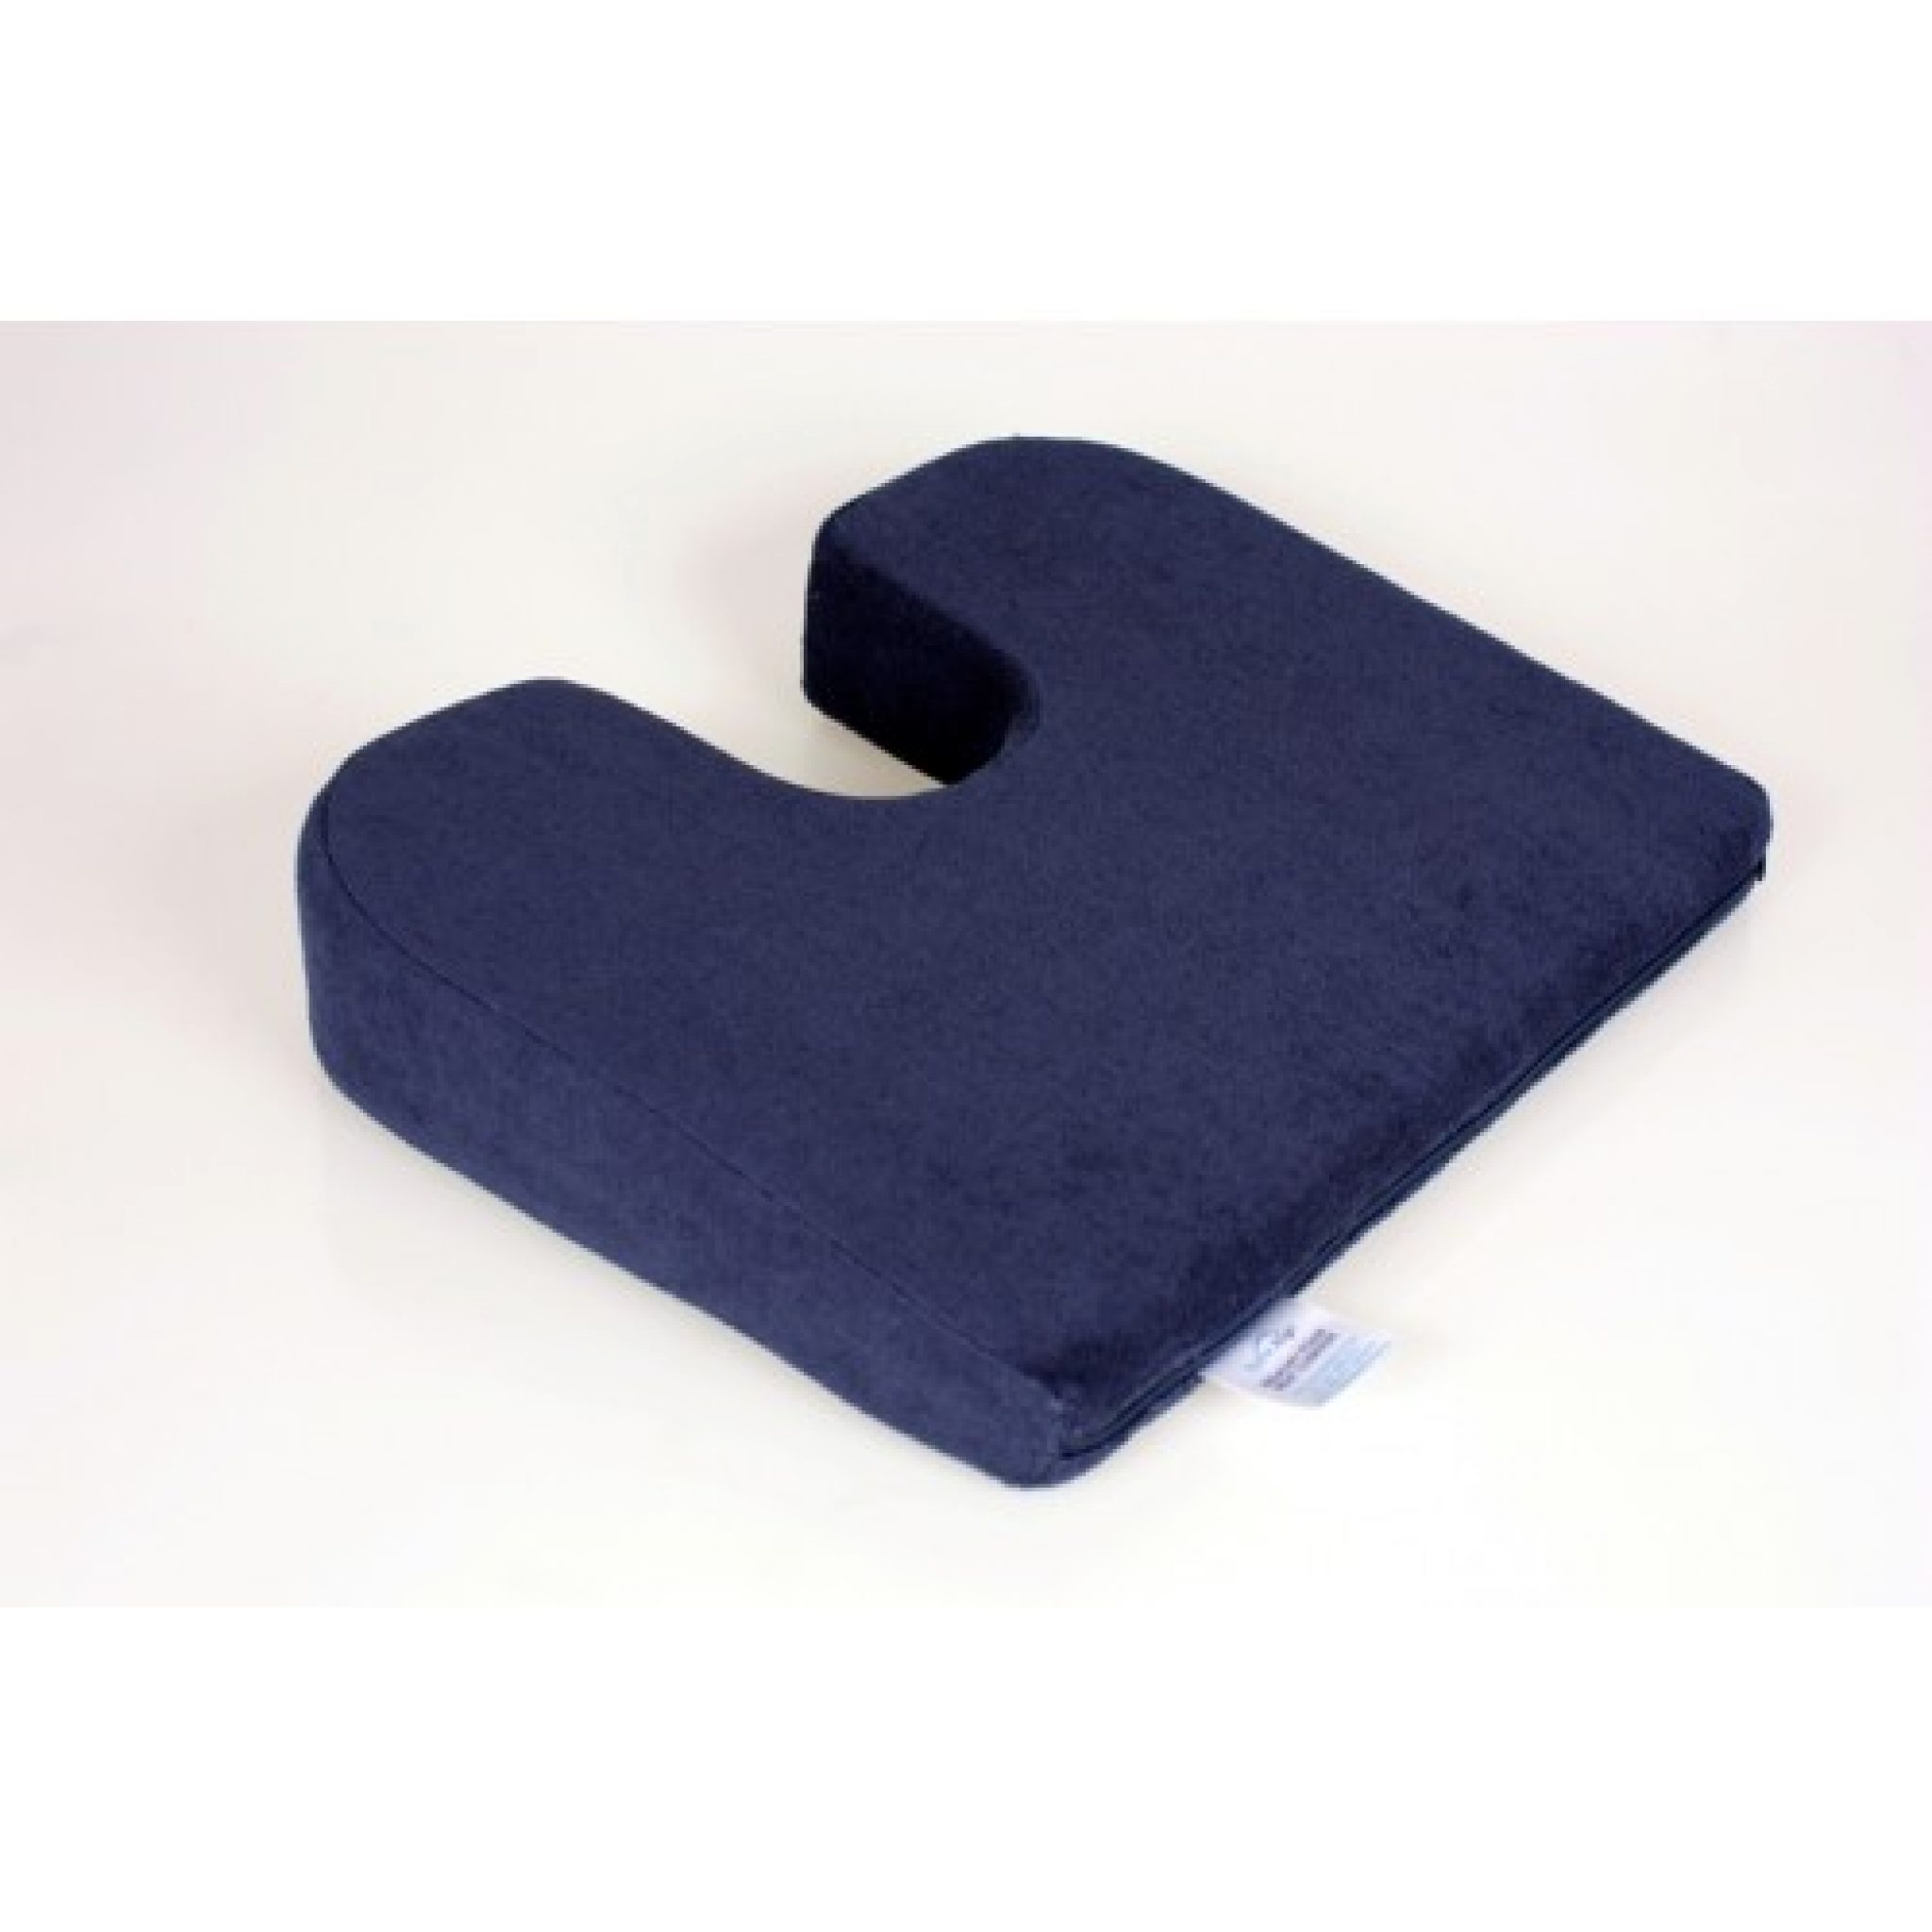 spine align comfort cushion